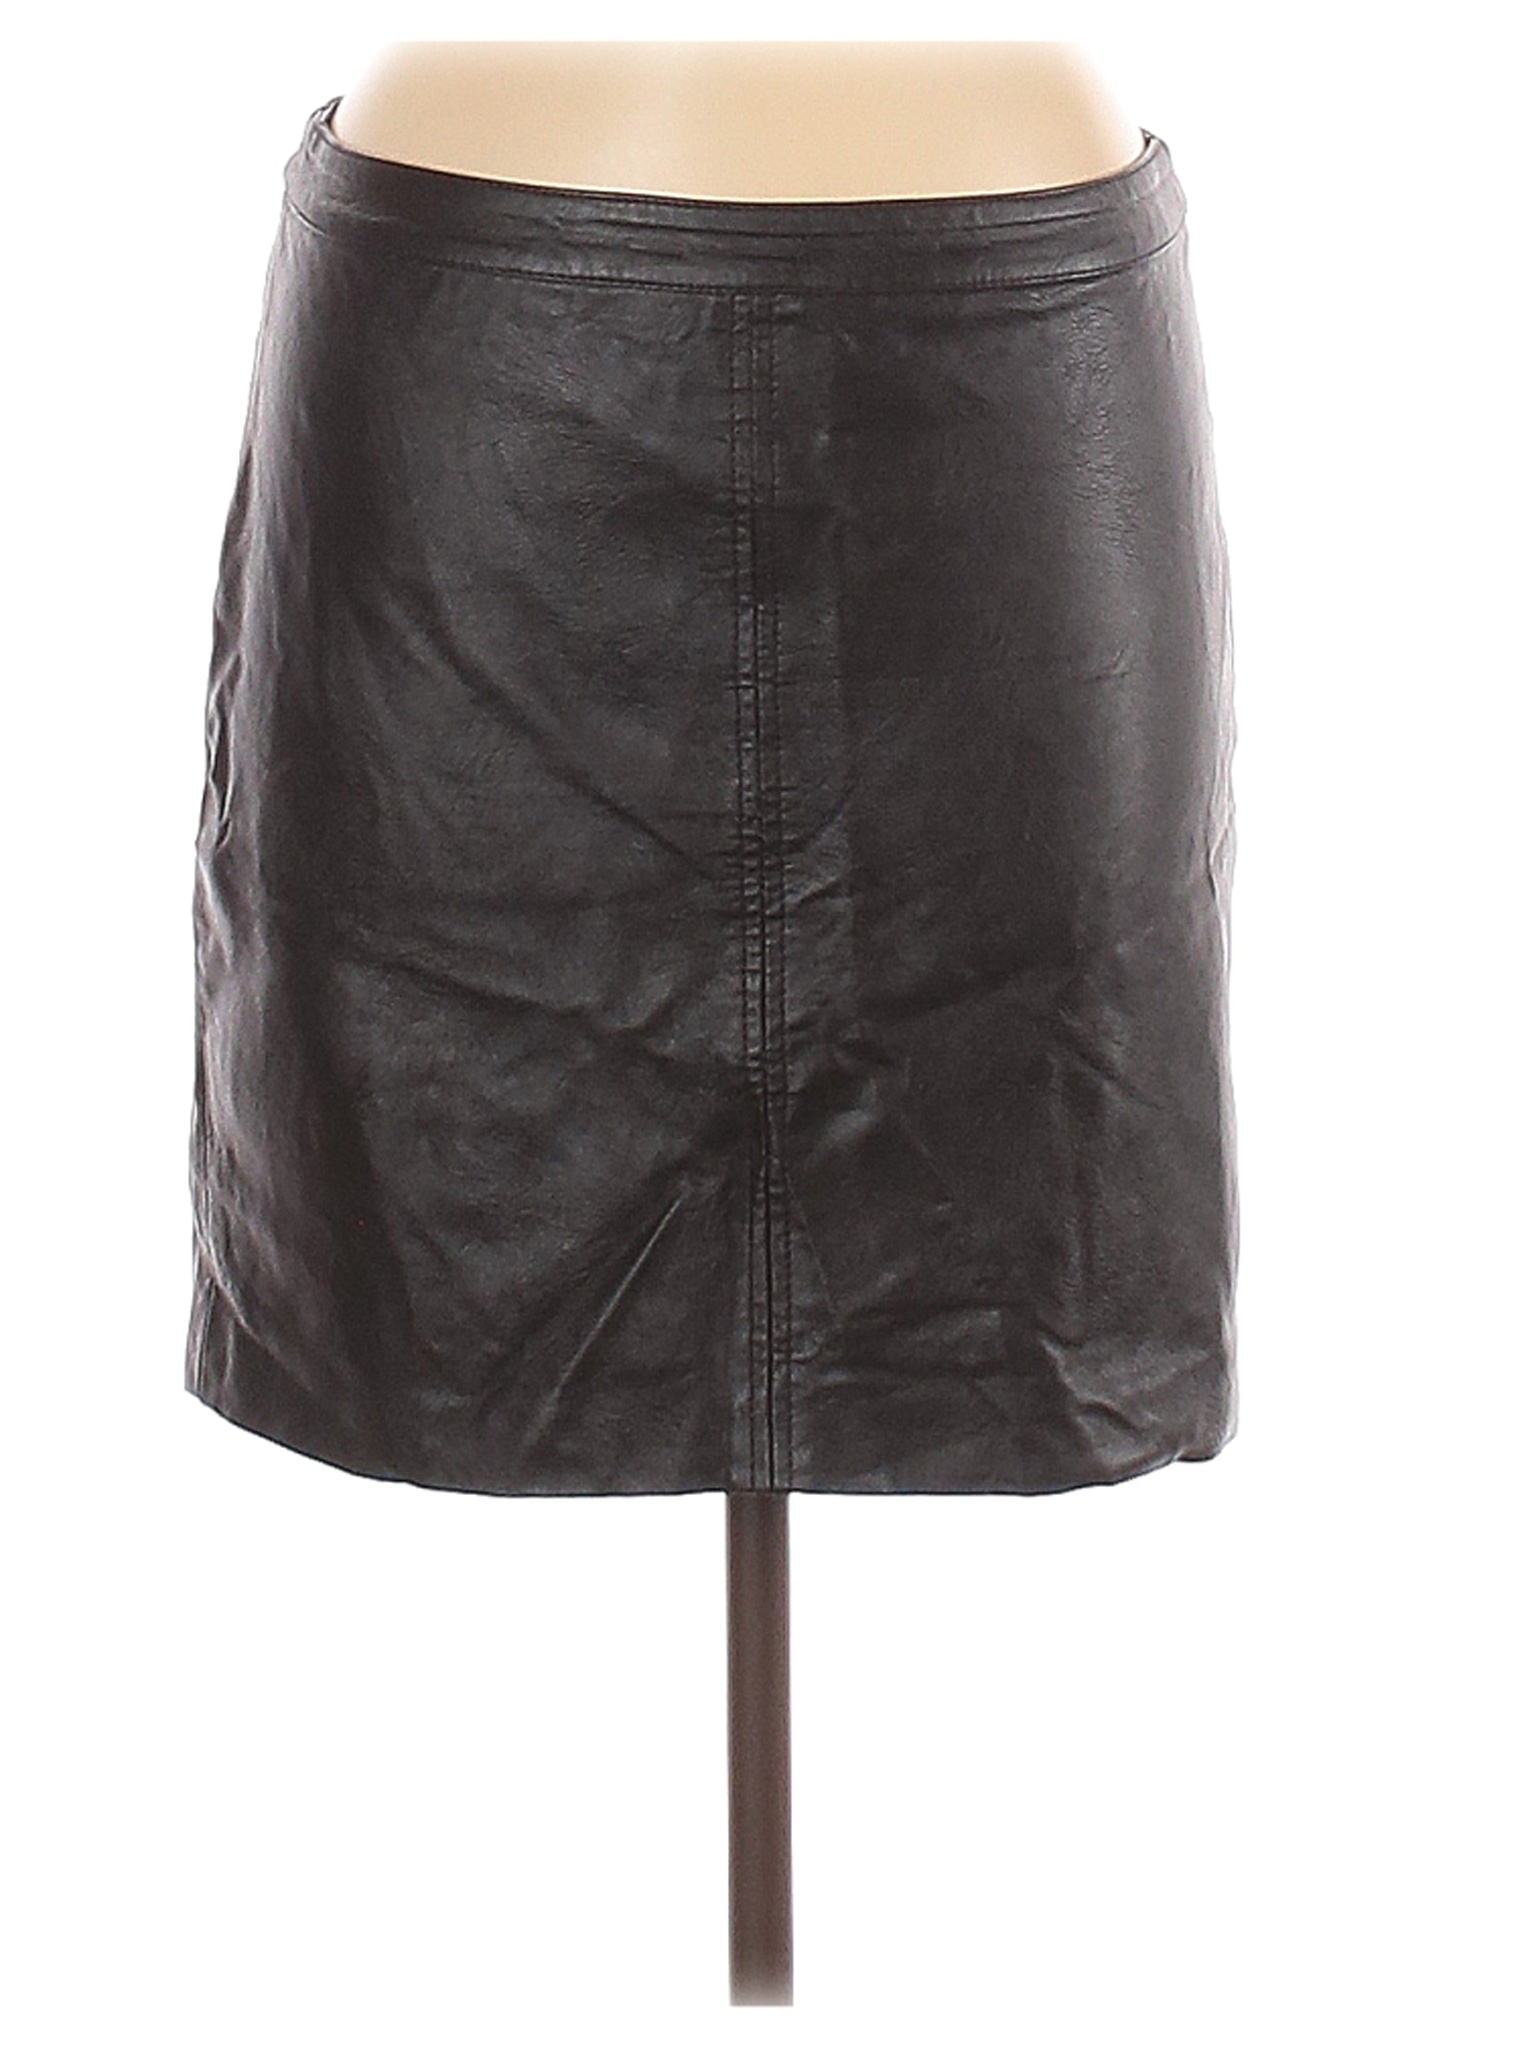 H&M Women Black Faux Leather Skirt 8 | eBay